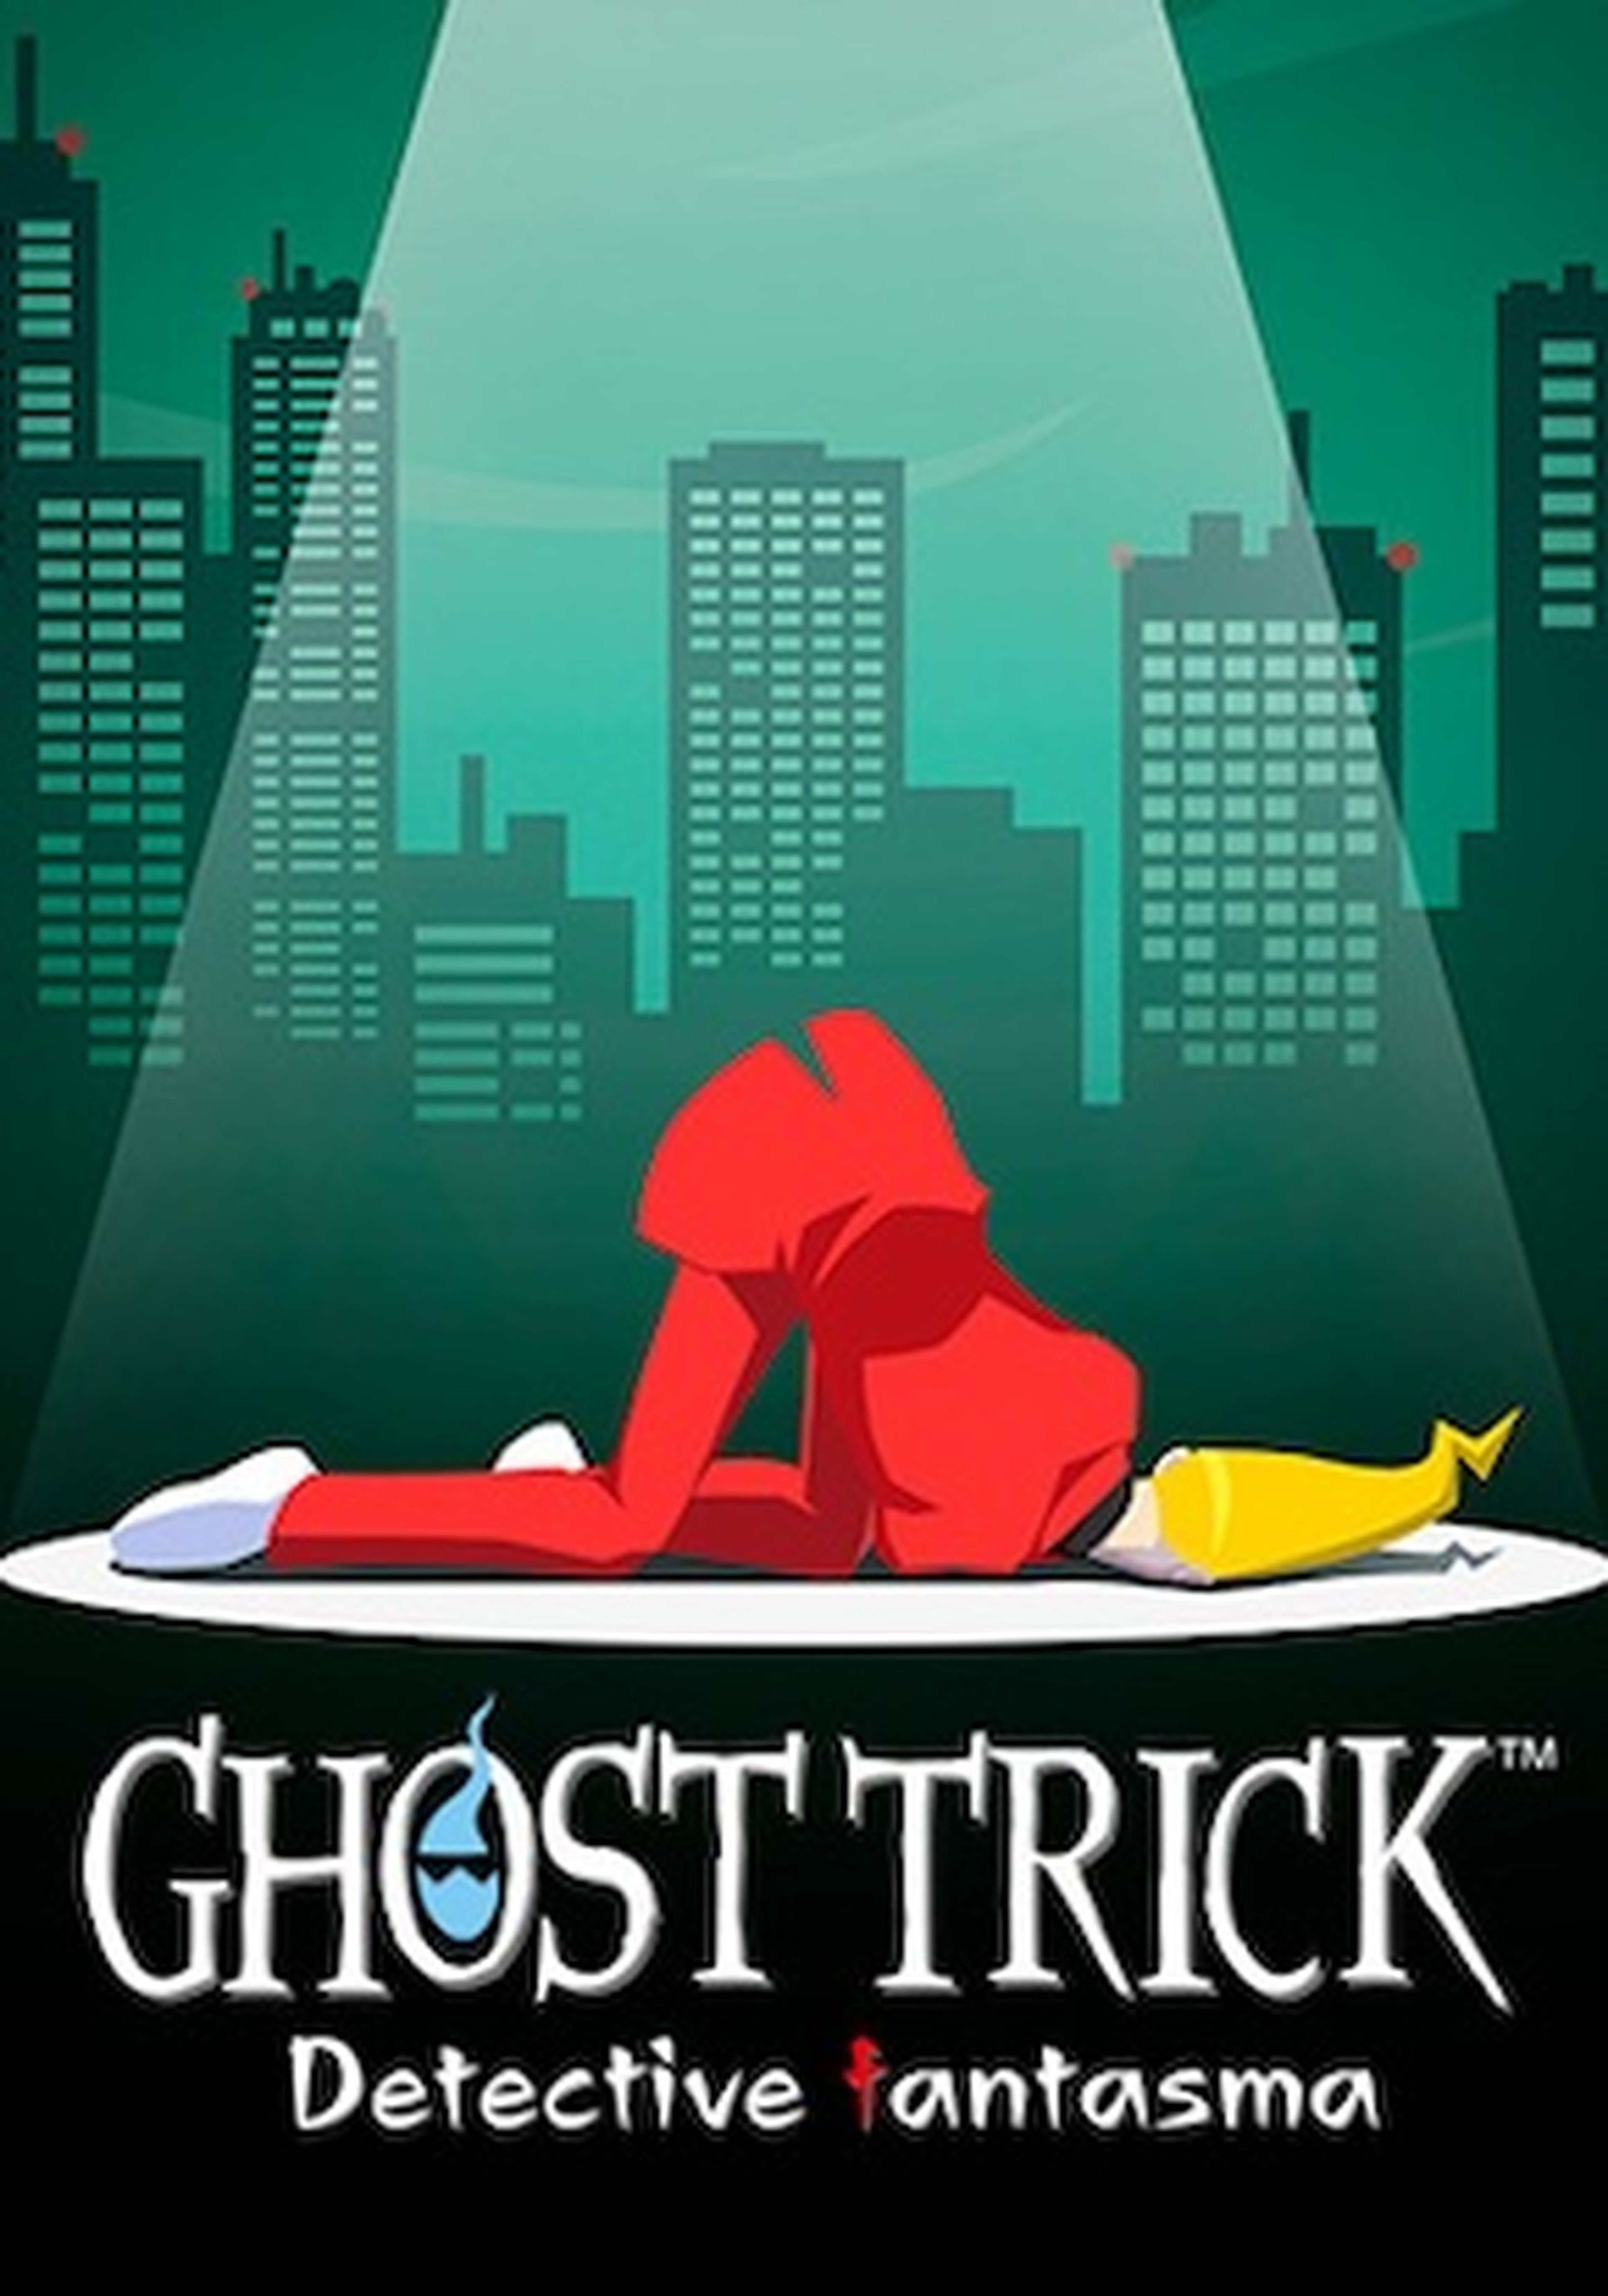 Ghost Trick Detective Fantasma ficha